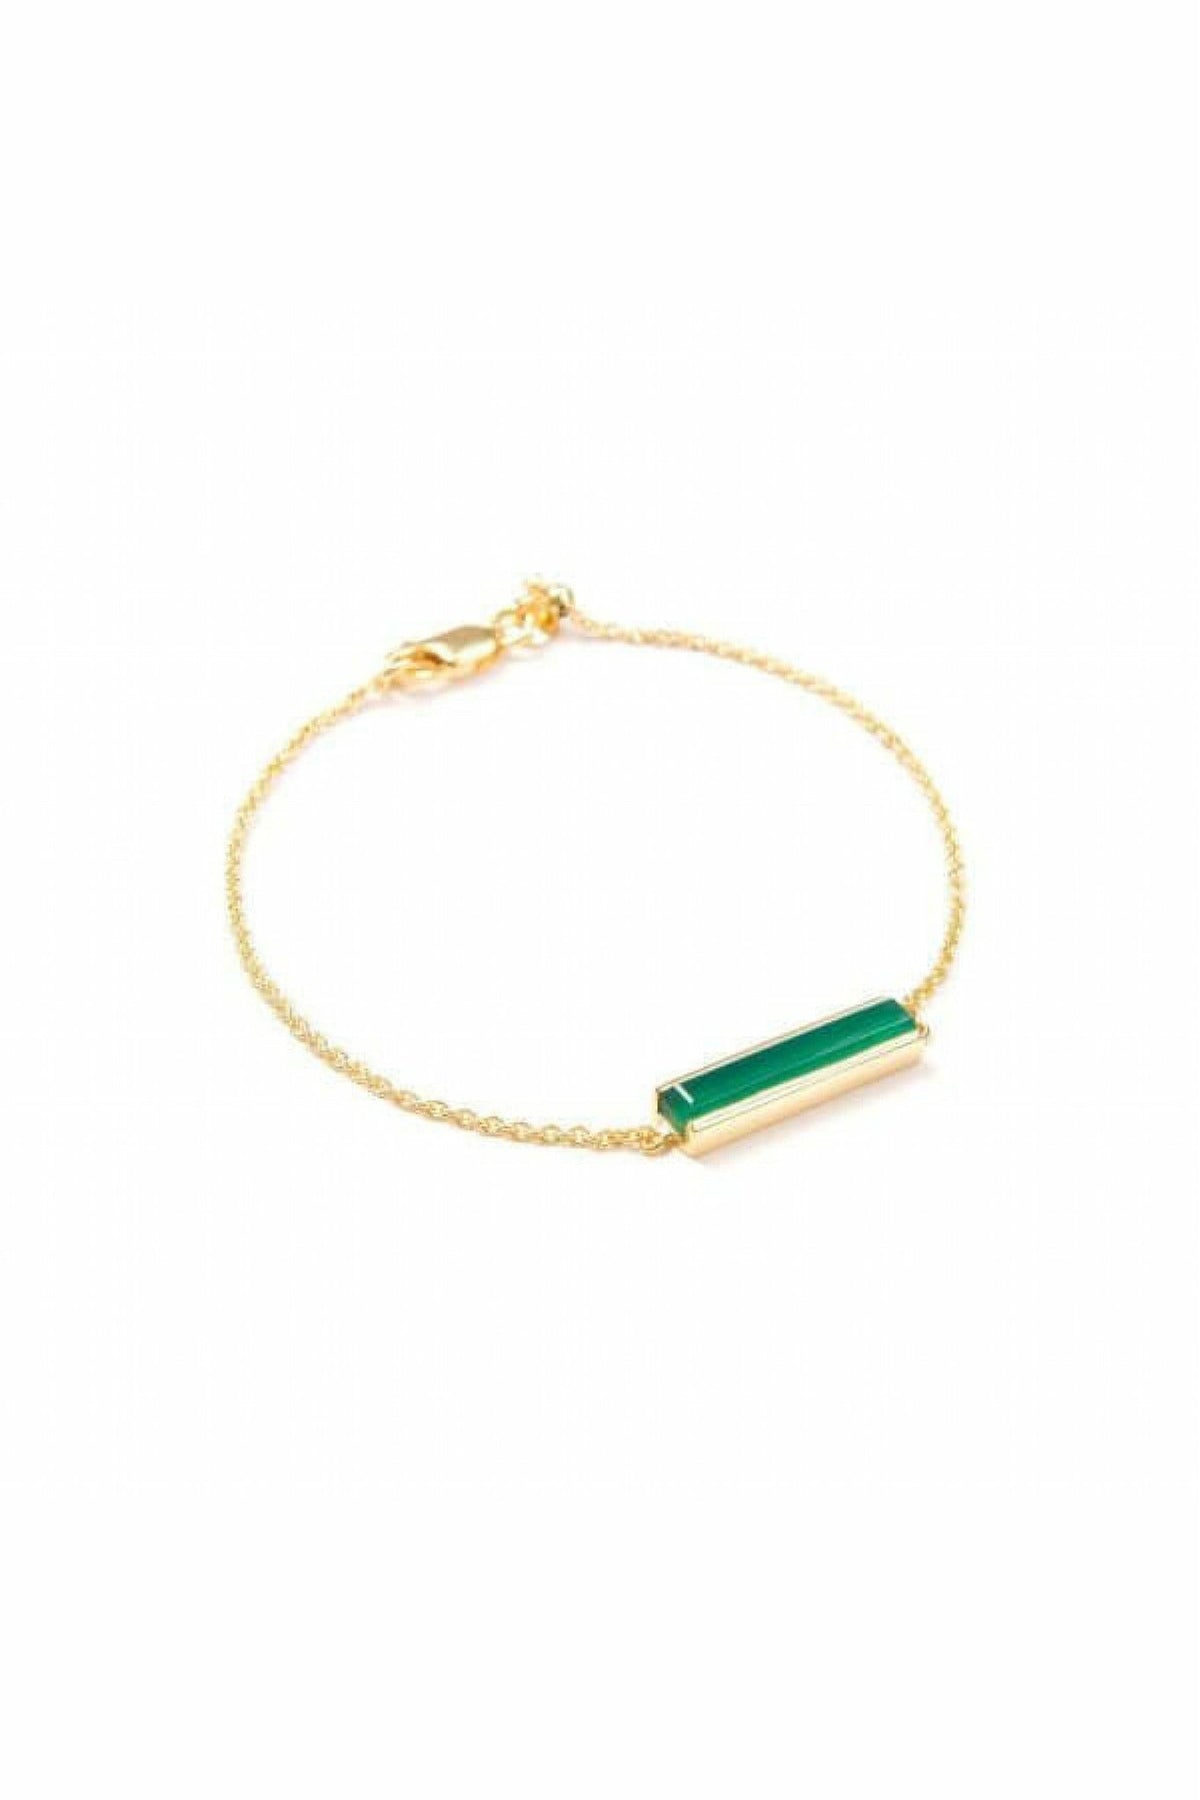 Urban Bracelet -- Green Onyx Stone JTL1052-UB-GOGV-OS